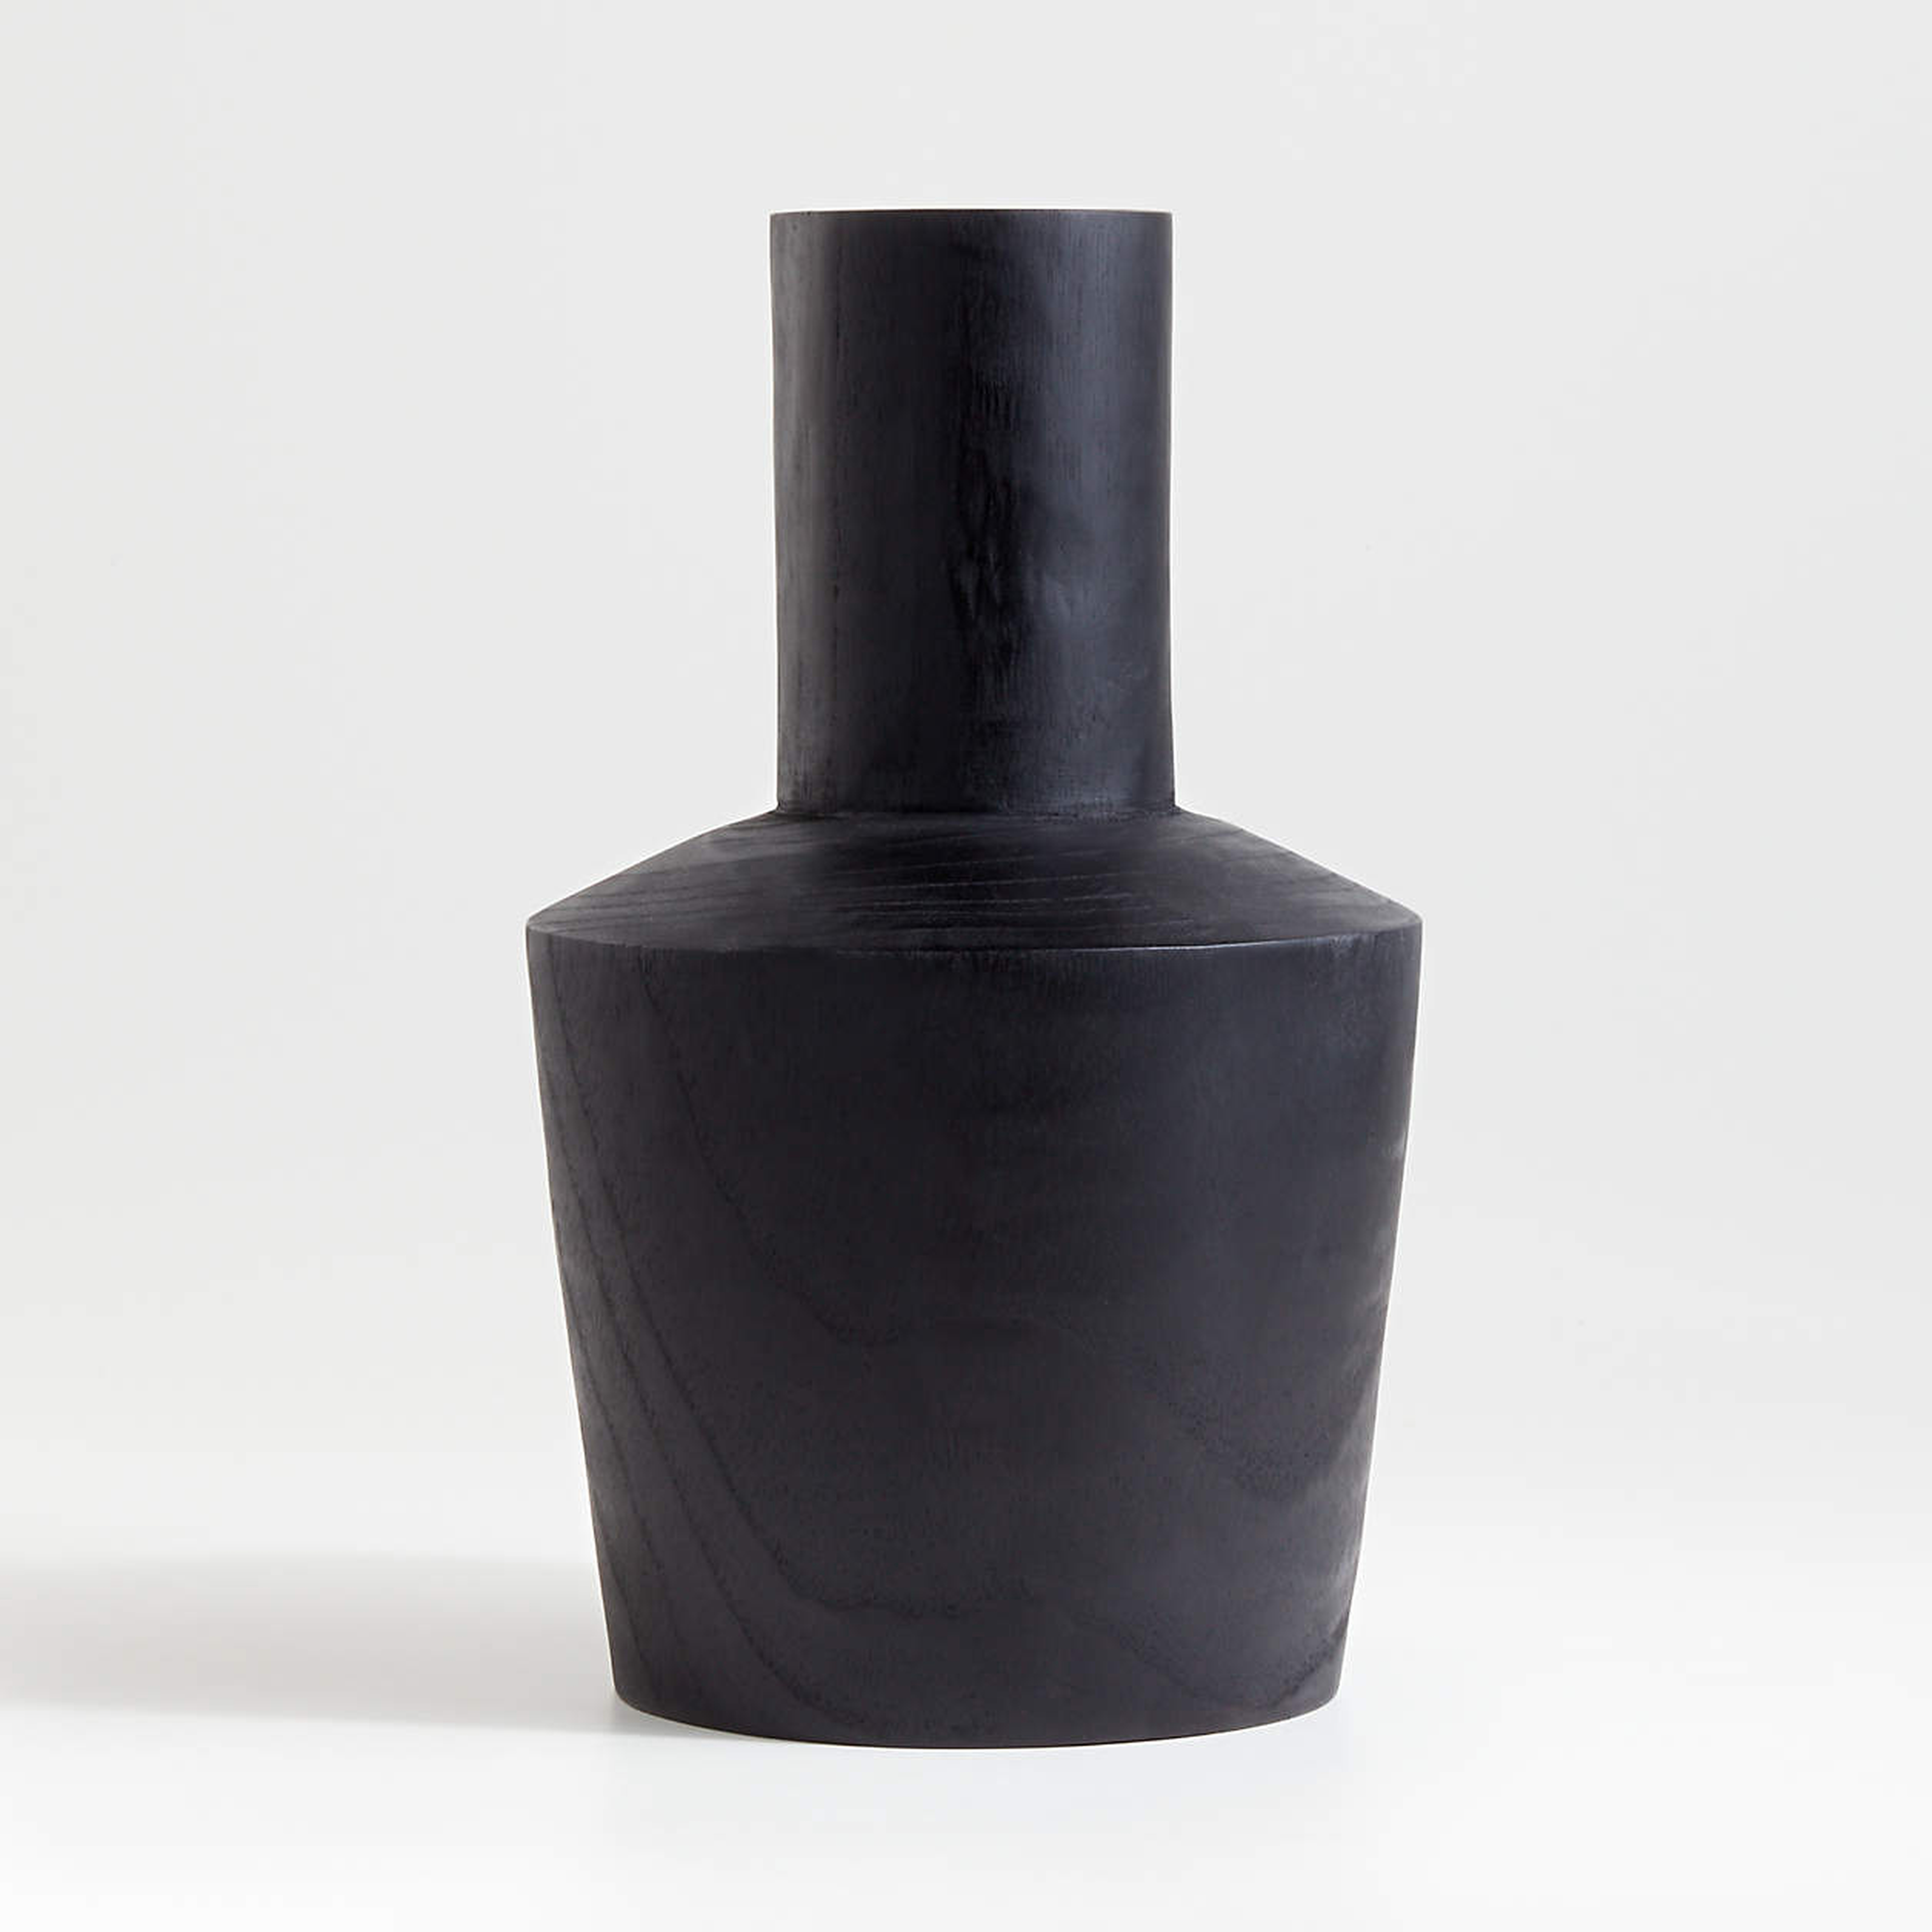 Arllon Wood Vase, Black, Large - Crate and Barrel